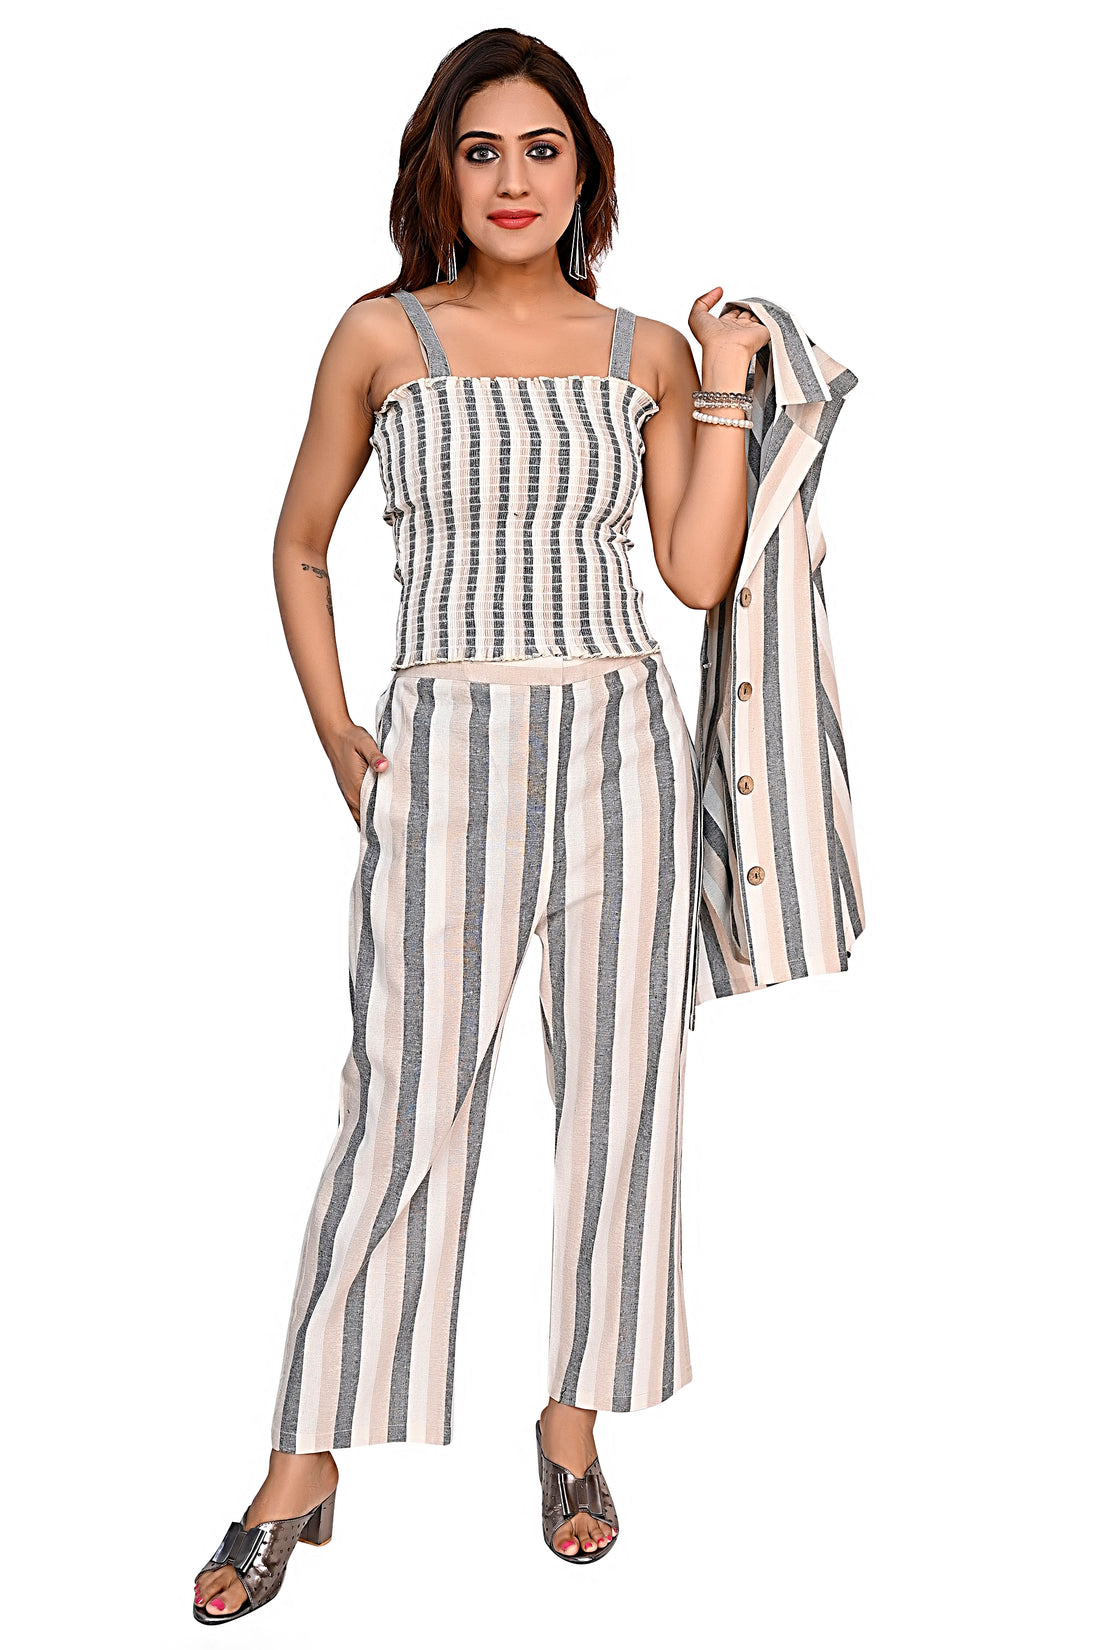 Nirmal online Premium Cotton Stripe co-ord set for Women in Grey Colour